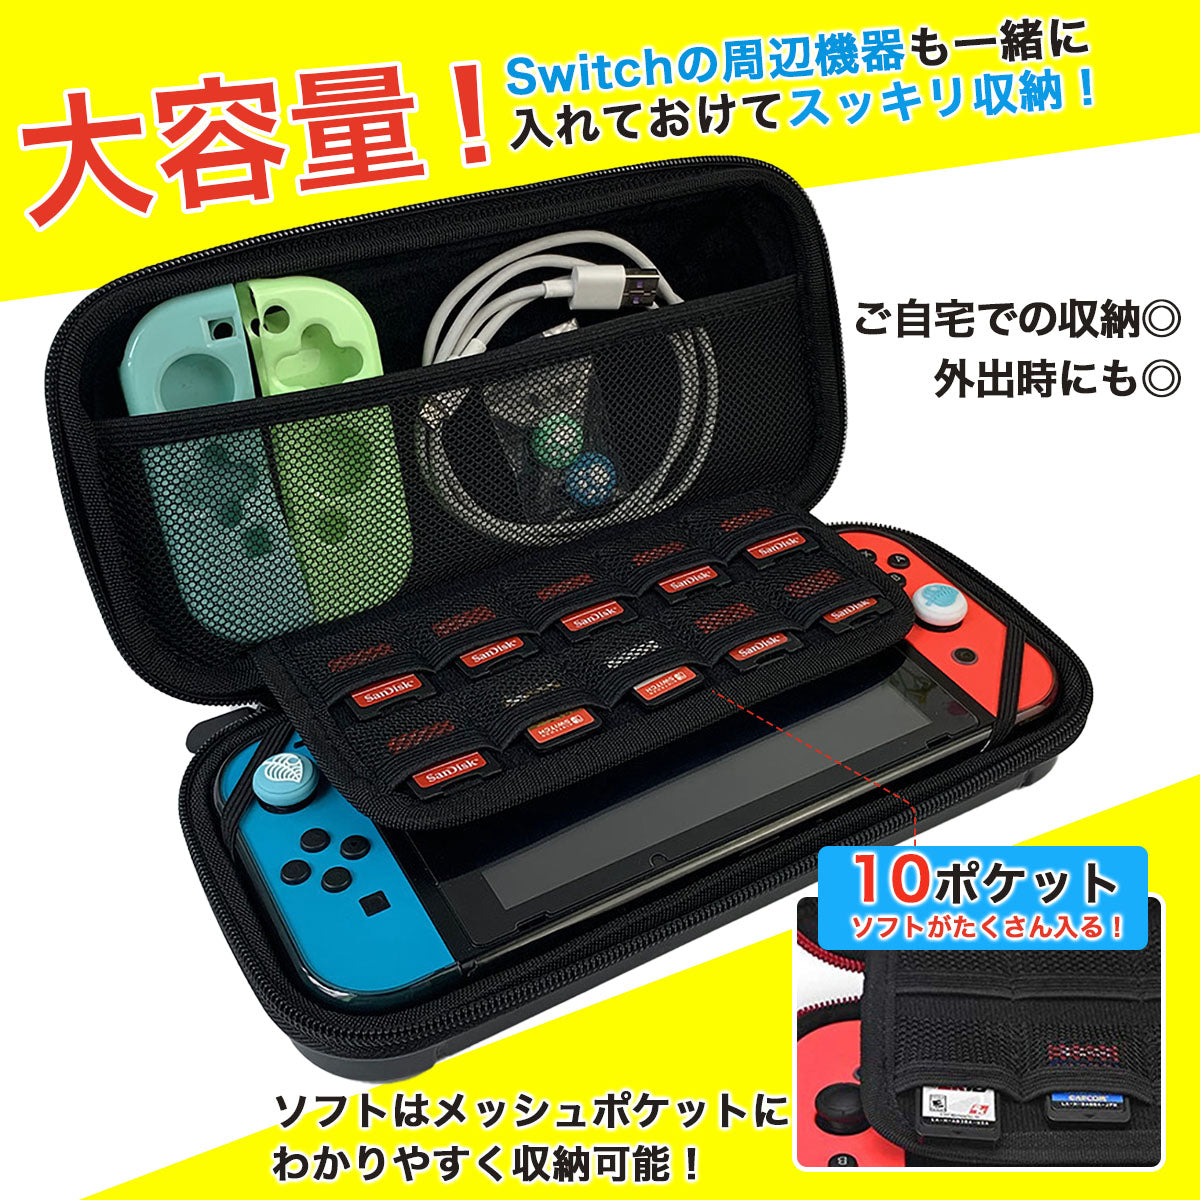 Nintendo Switch Lite メタルケース ケース 持ち運び カード収納